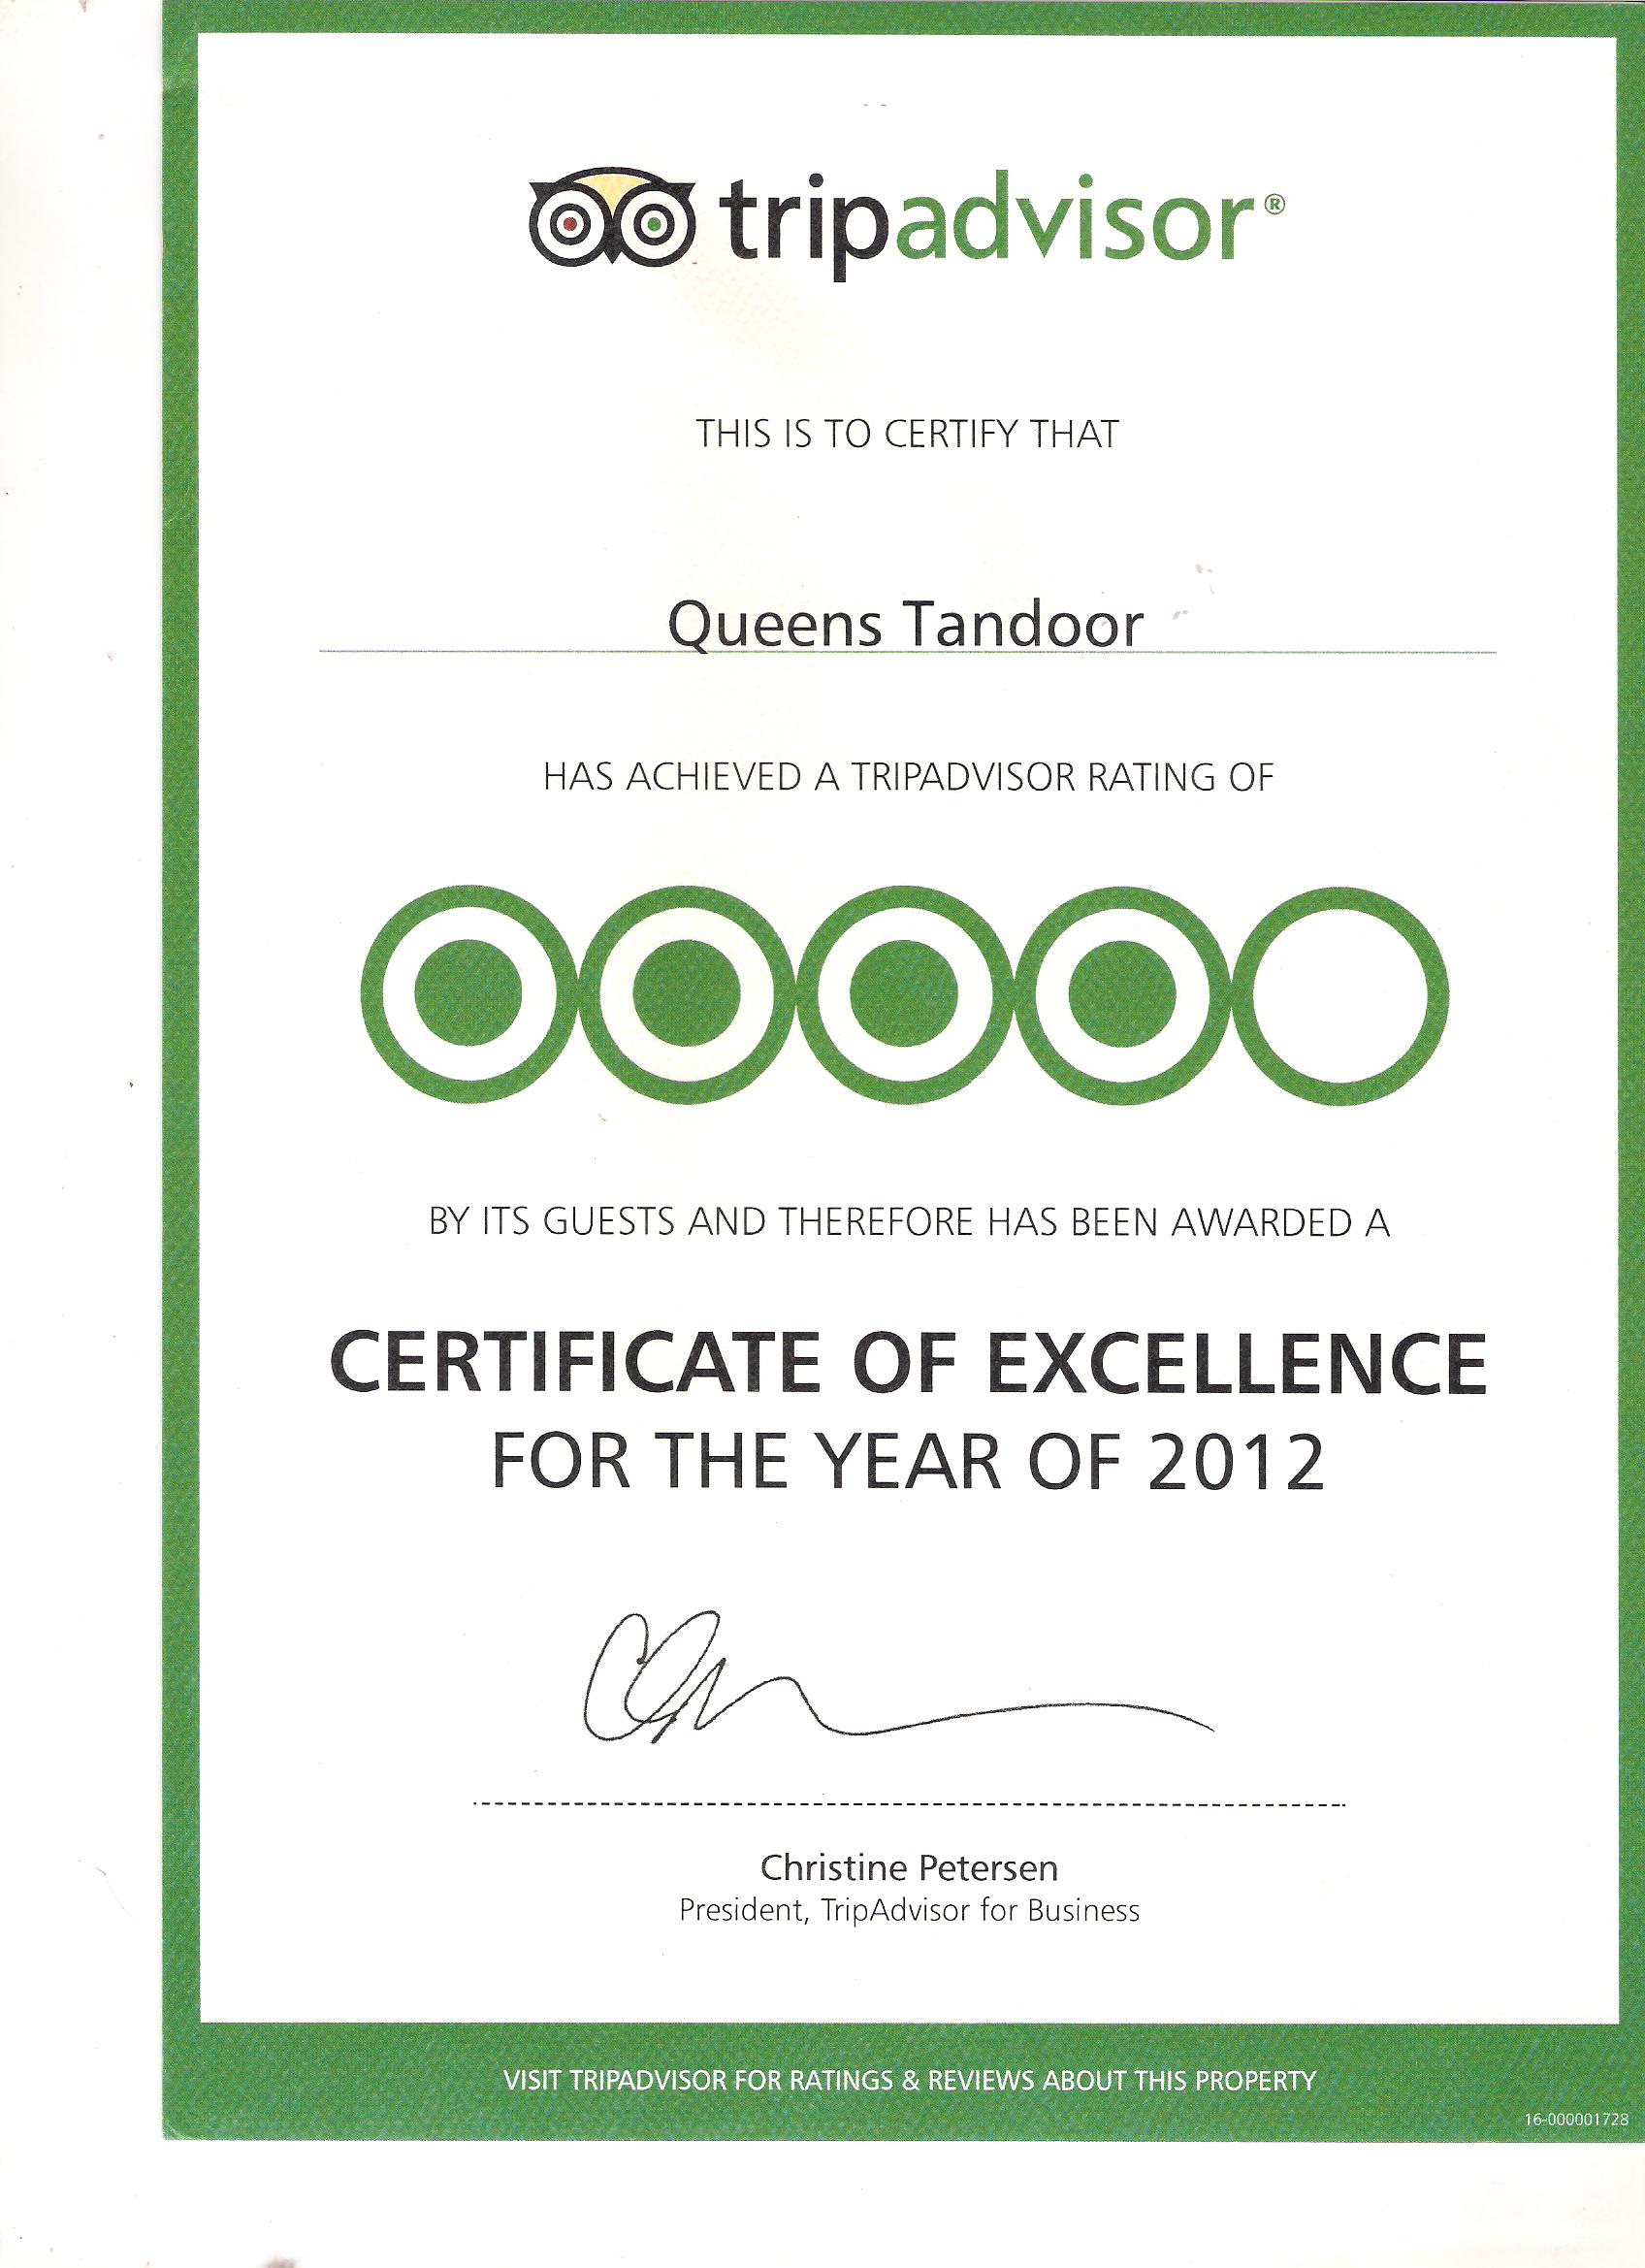 Certificate Of Excellence Queens Tandoor from Tripadvisor 2012